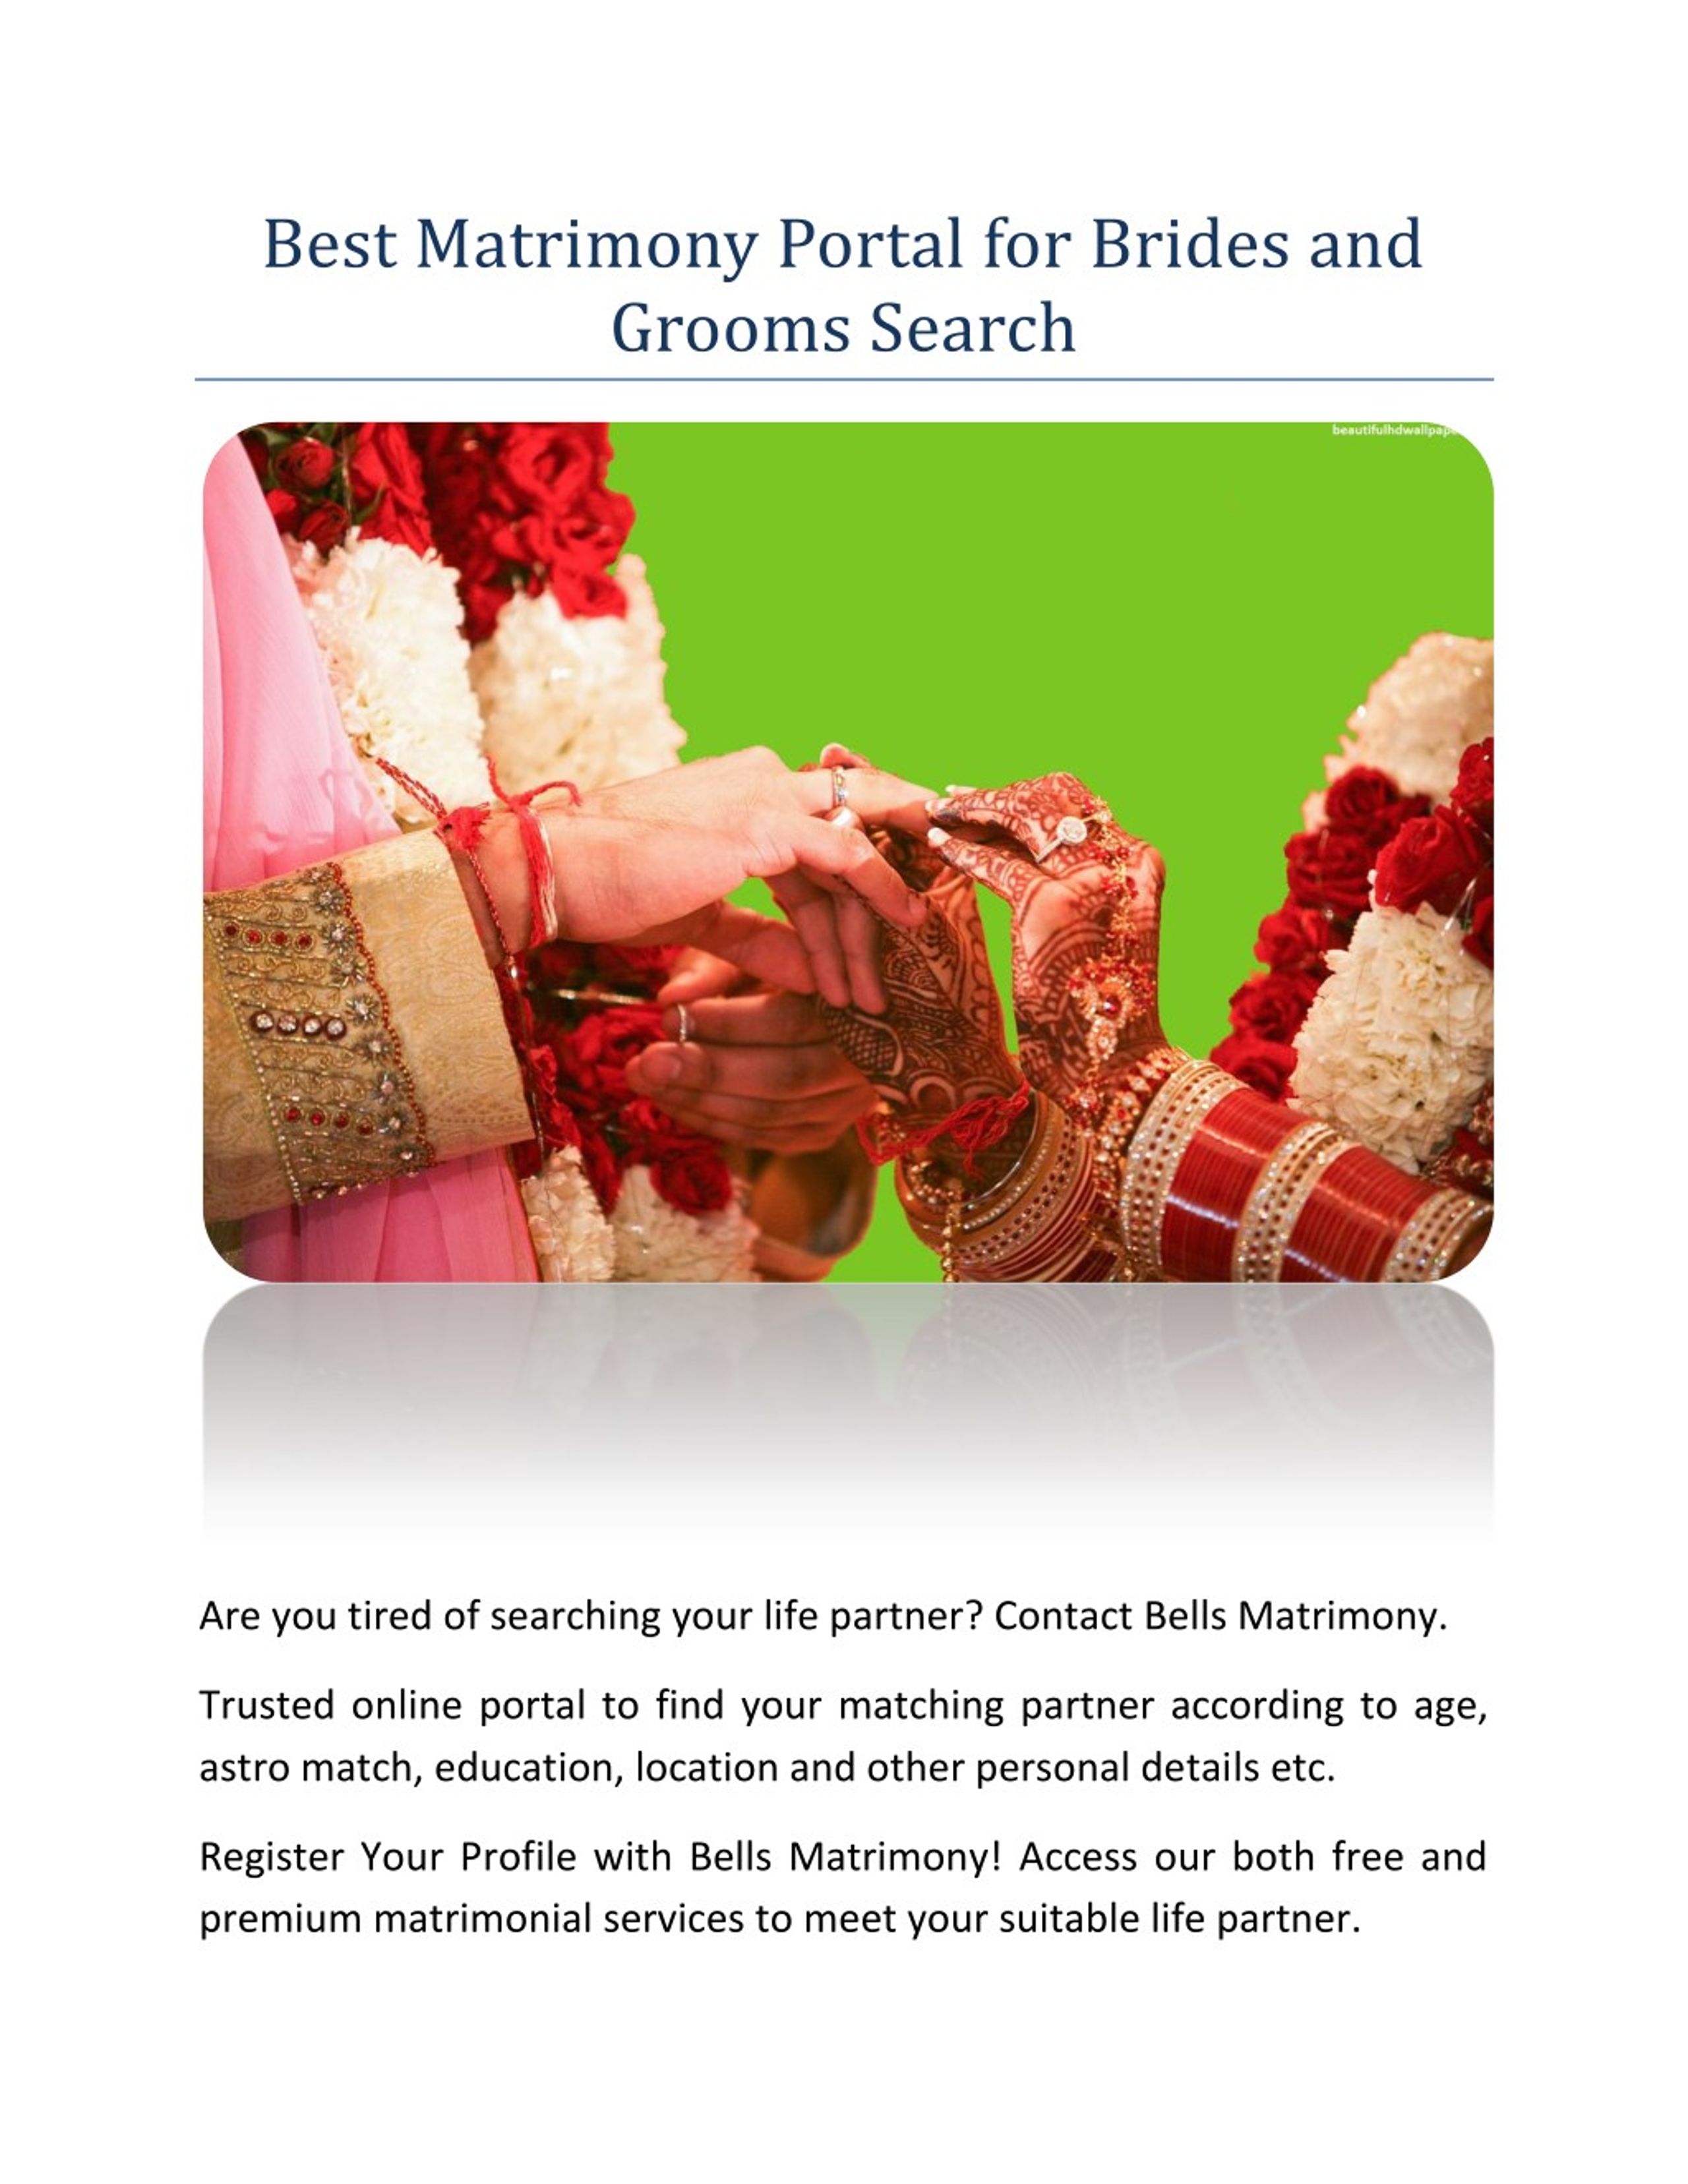 Matrimony search